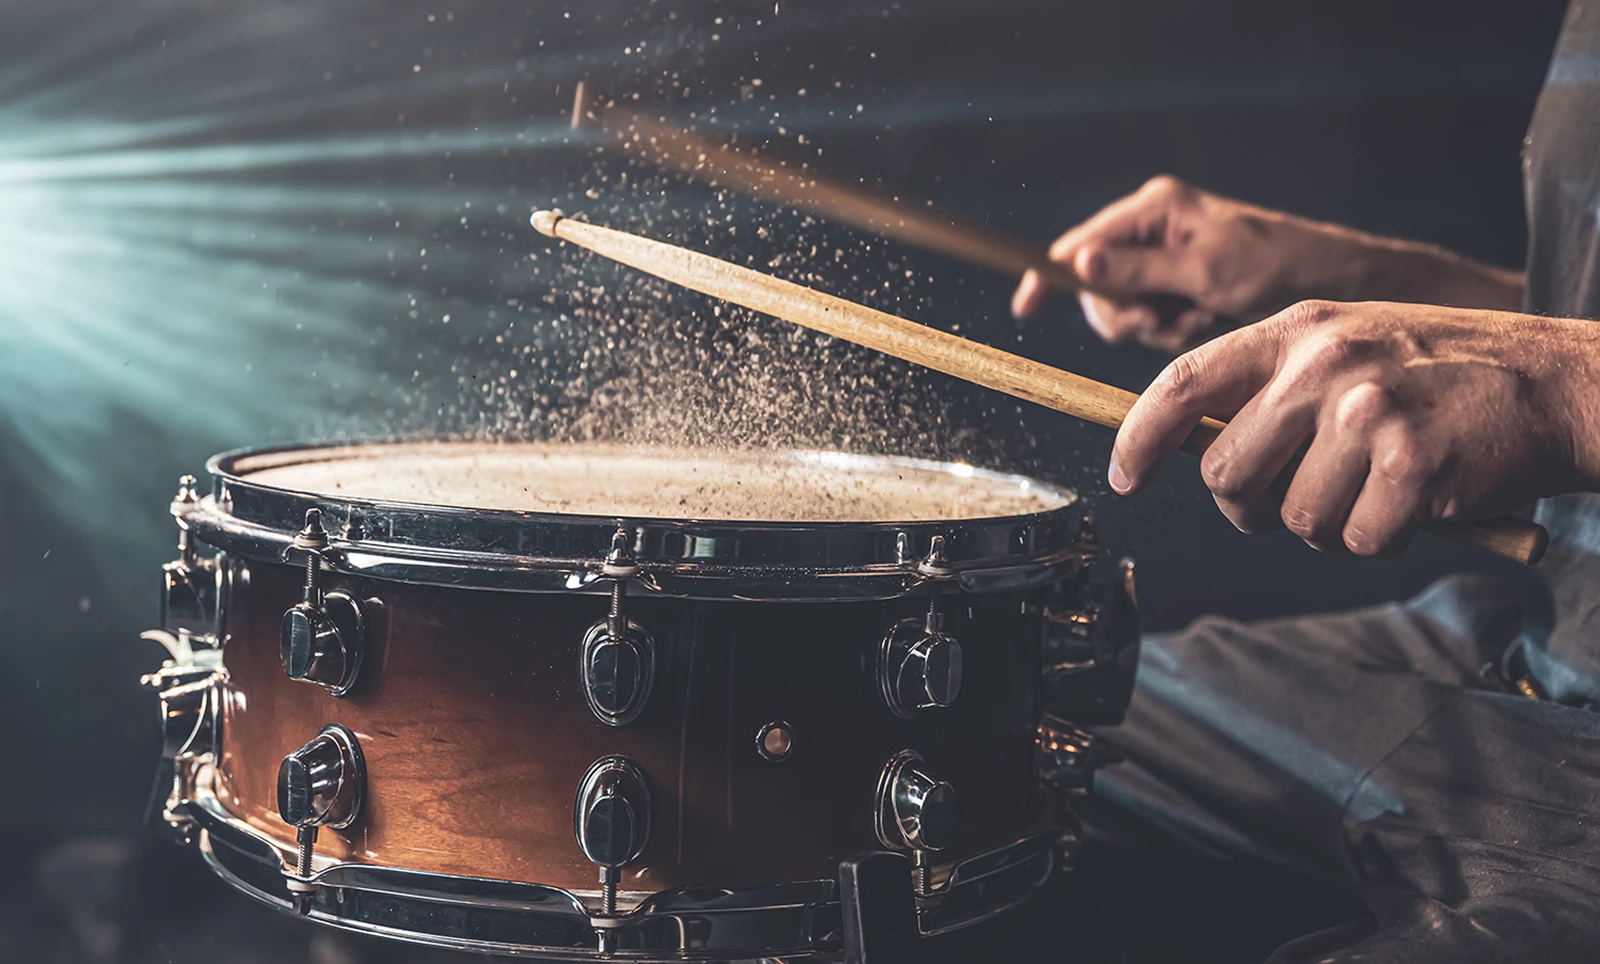 Drummer Using Drum Sticks Hitting Snare Drum With Splashing Water Black Background Studio Lighting Close Up